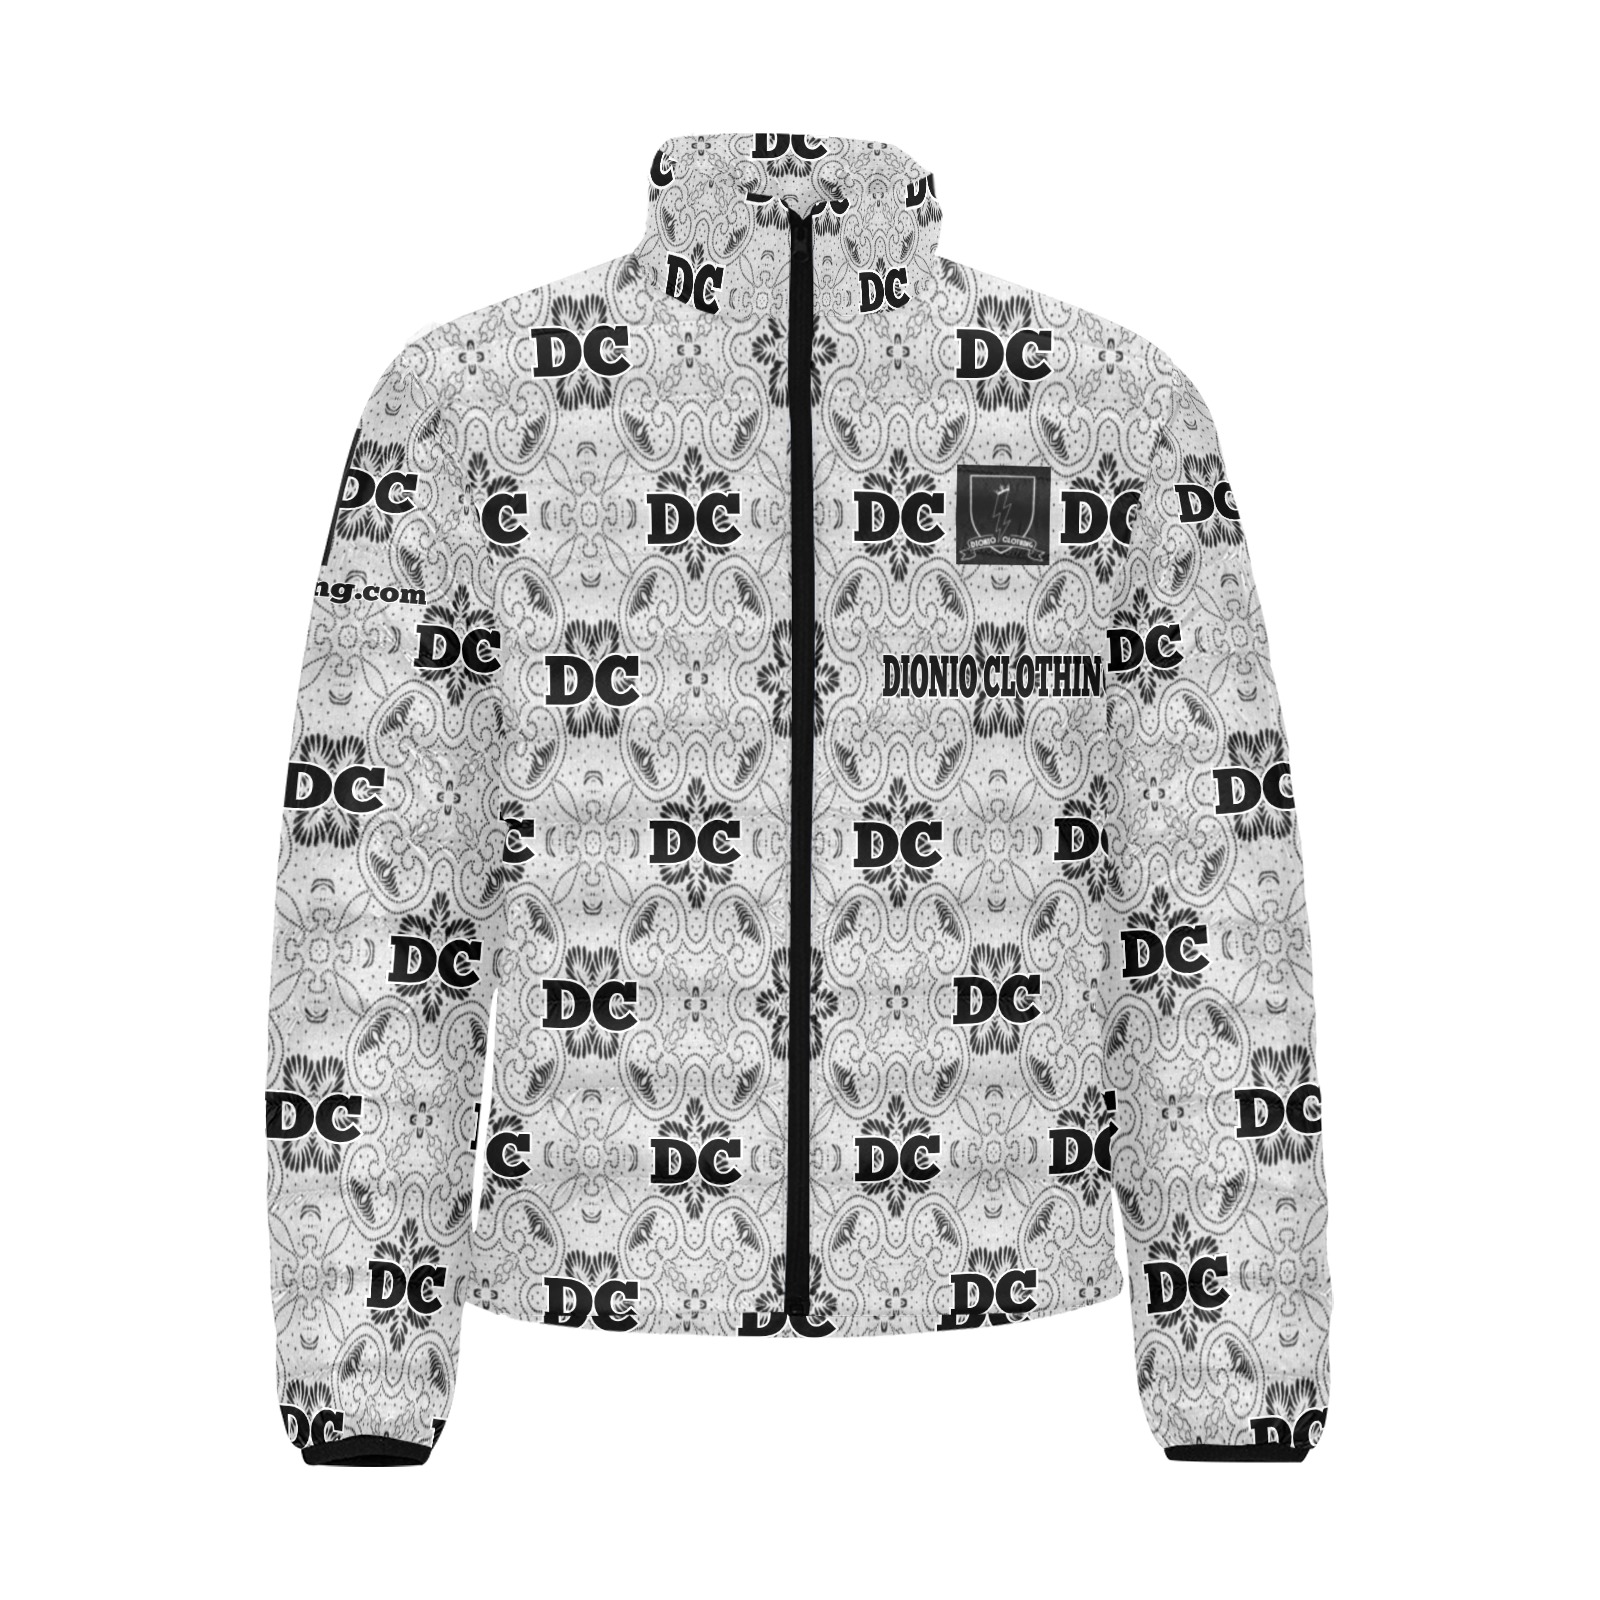 DIONIO Clothing - Luxury Logo Jacket Men's Stand Collar Padded Jacket (Model H41)